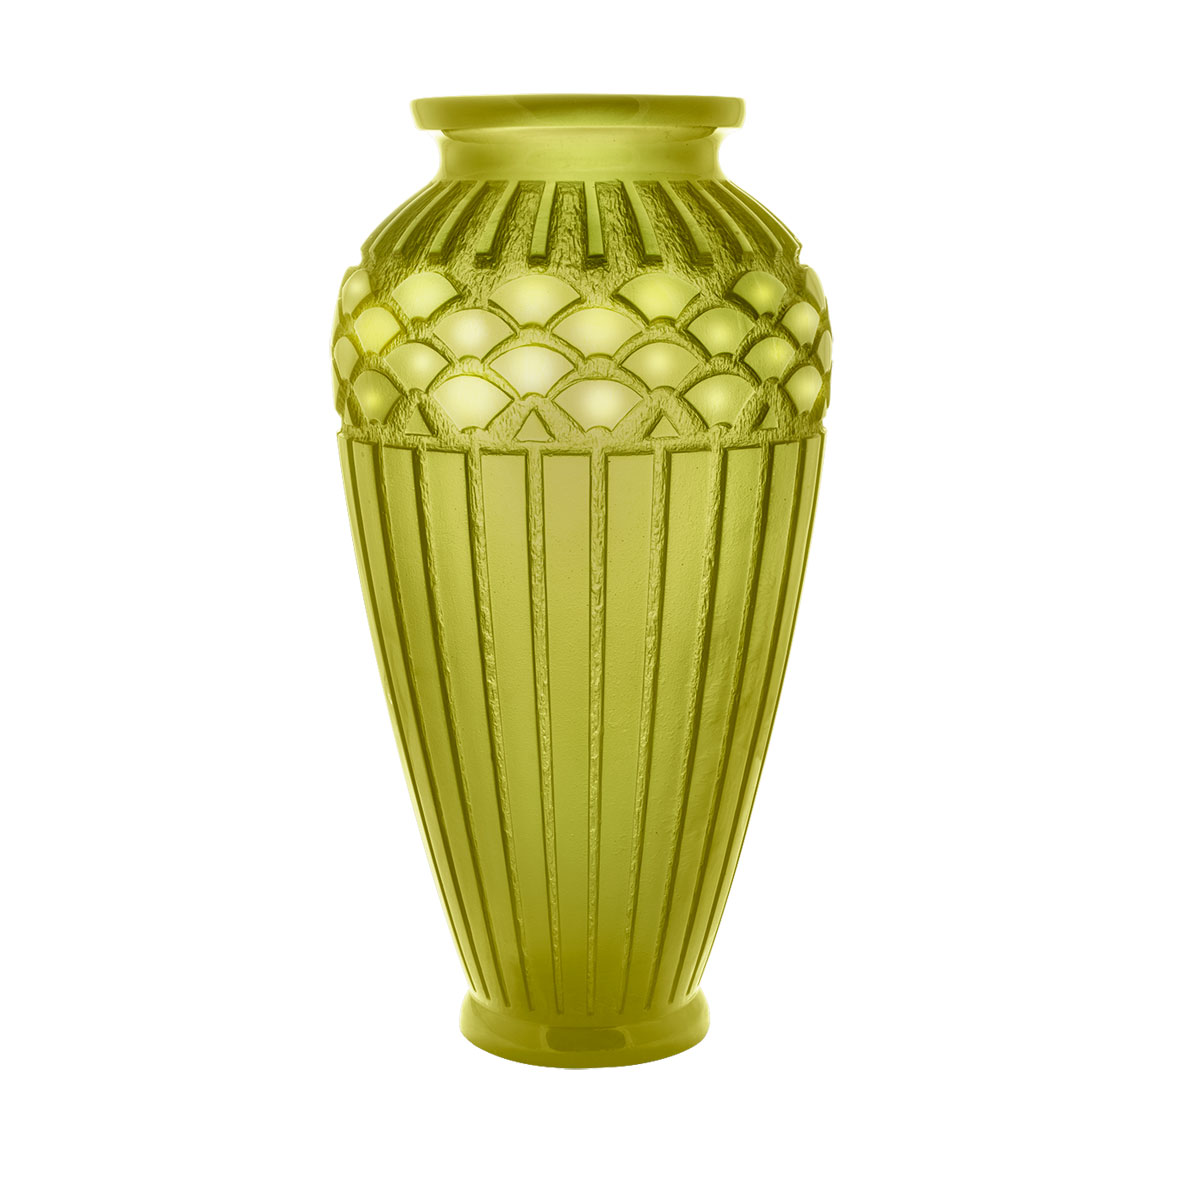 Daum 20.1" Rhythms Vase in Olive Green